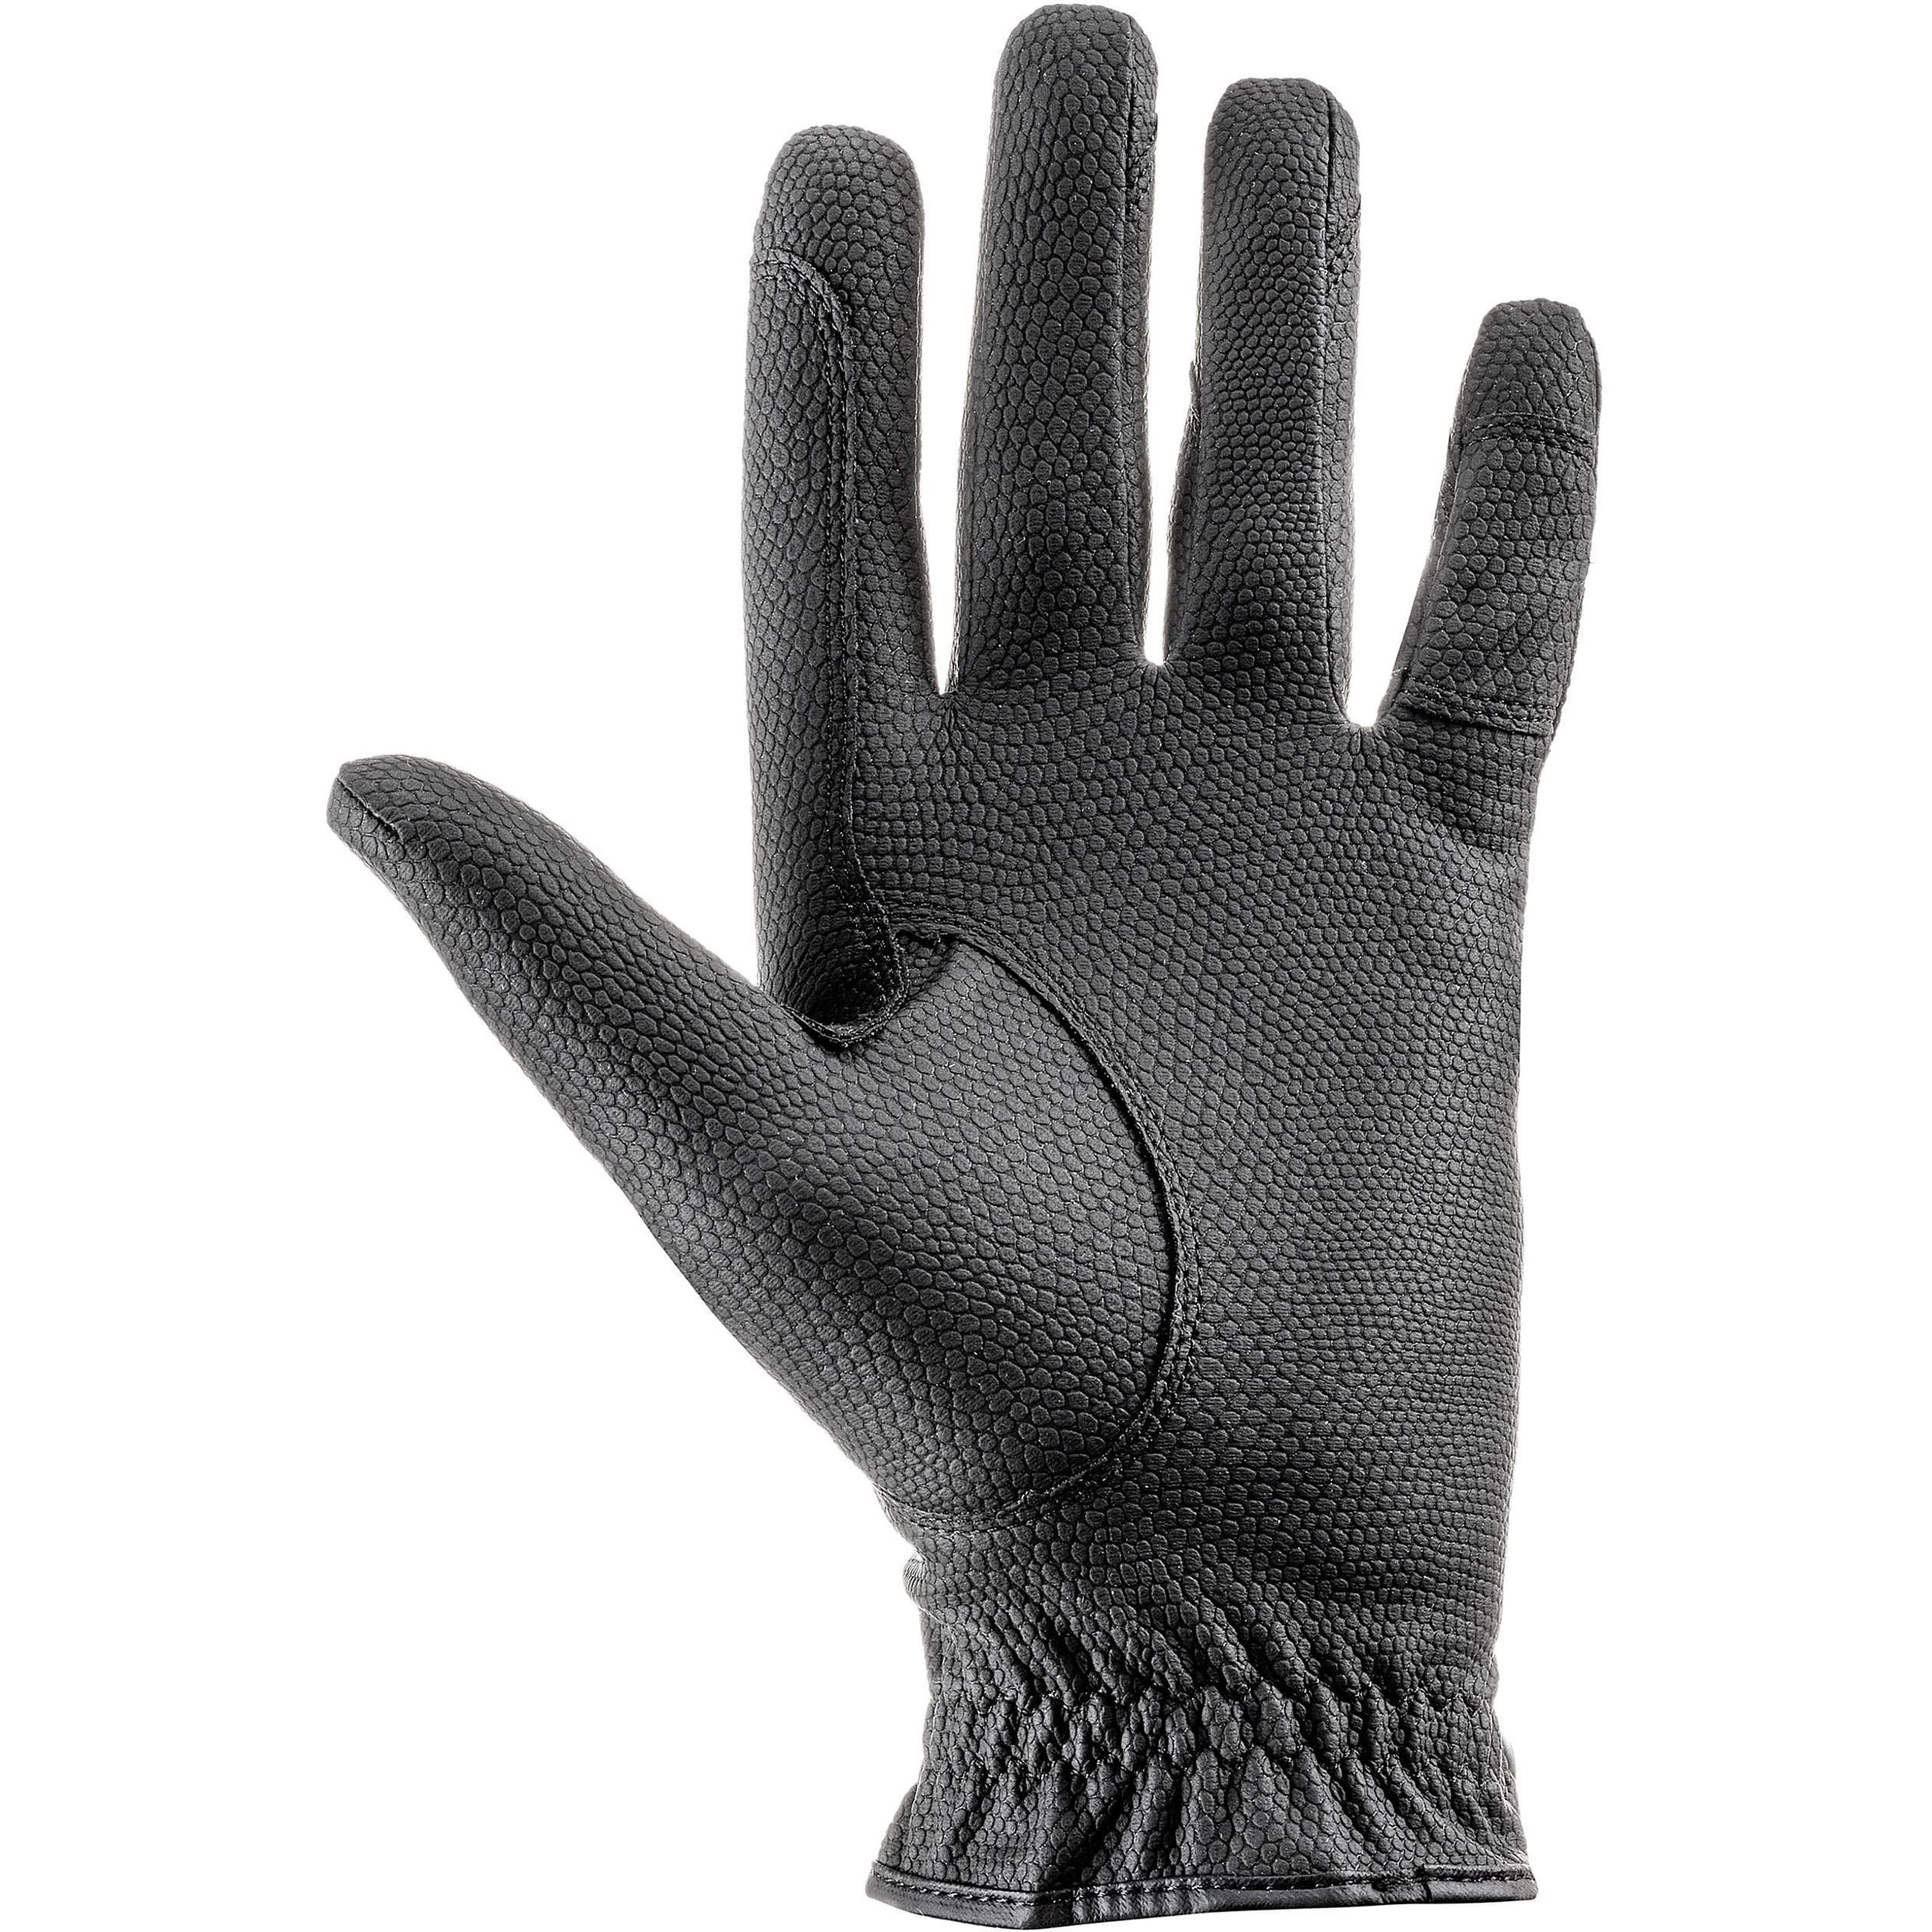 Riding glove i-performance 2, black